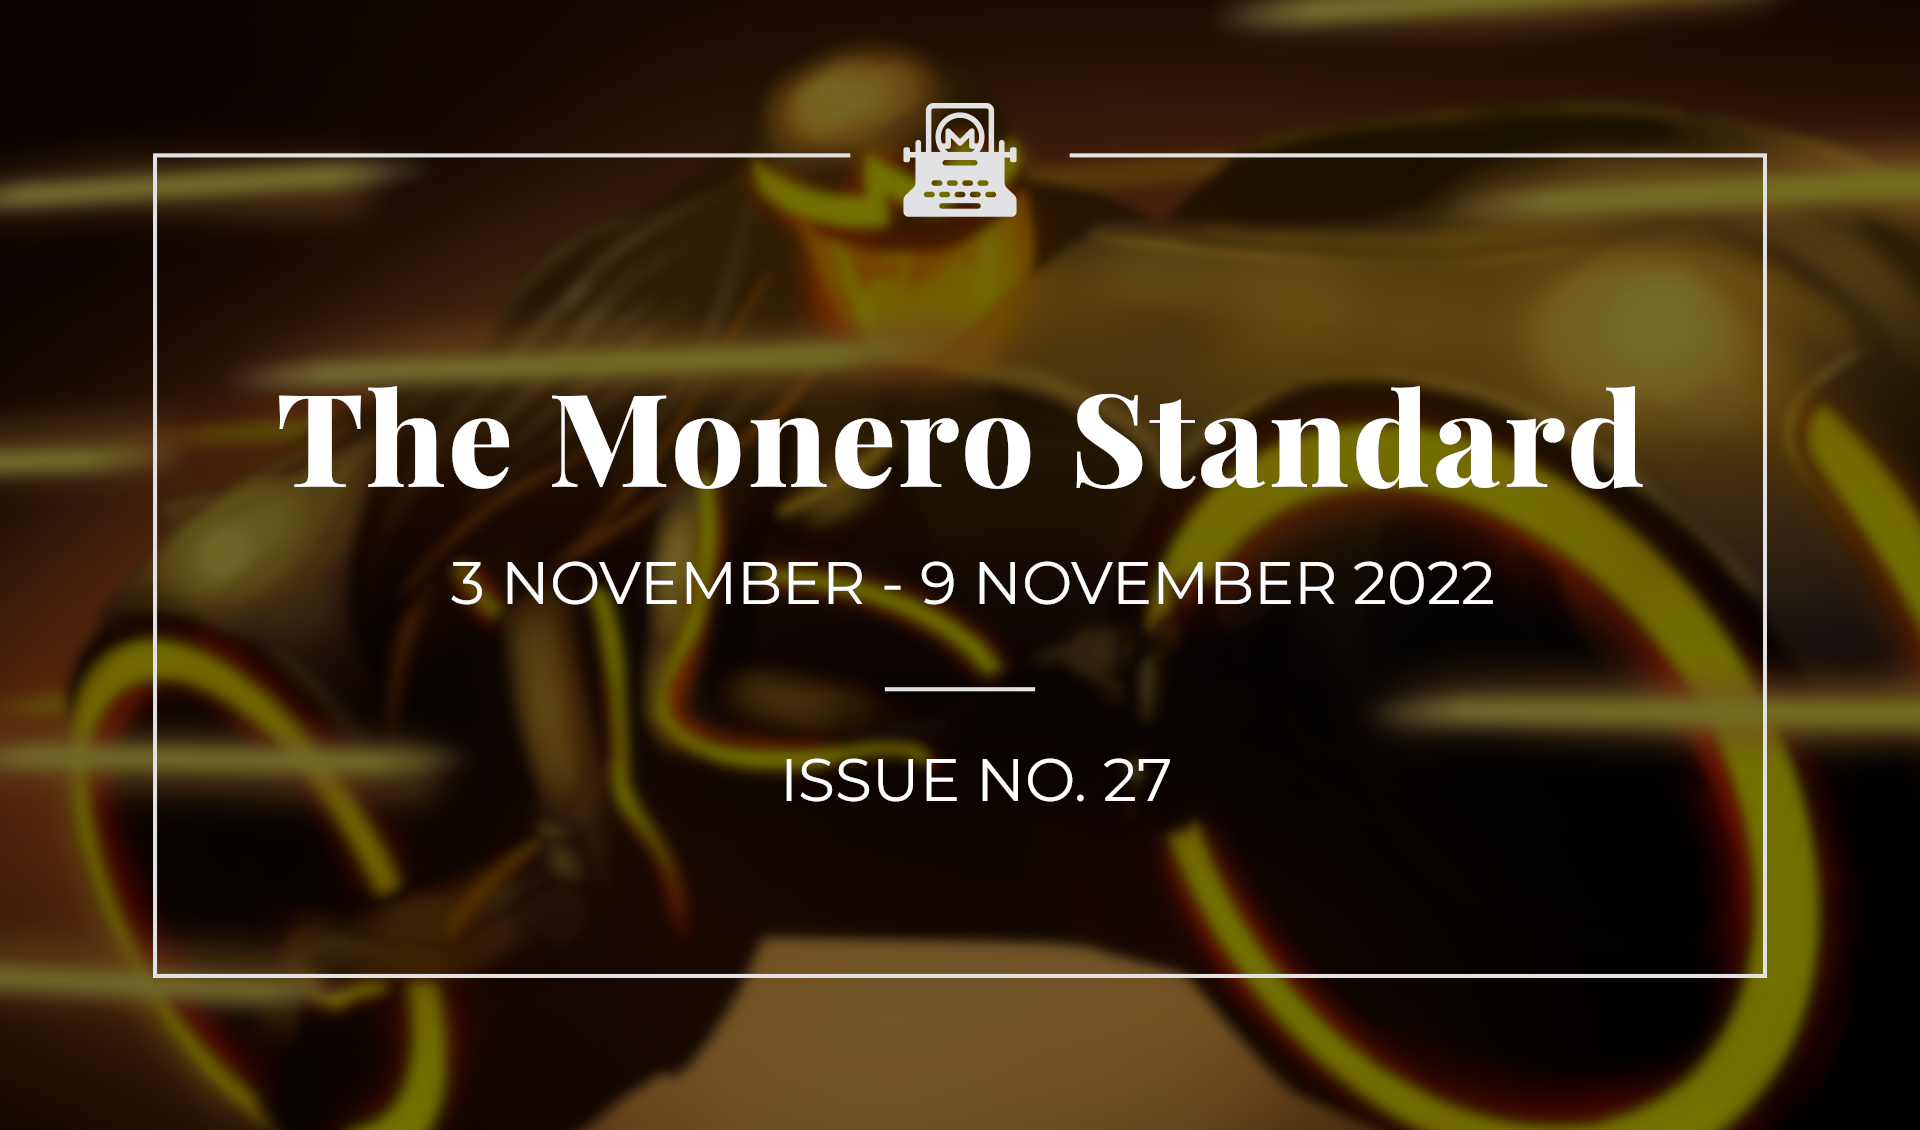 The Monero Standard #27: 3 November 2022 - 9 November 2022